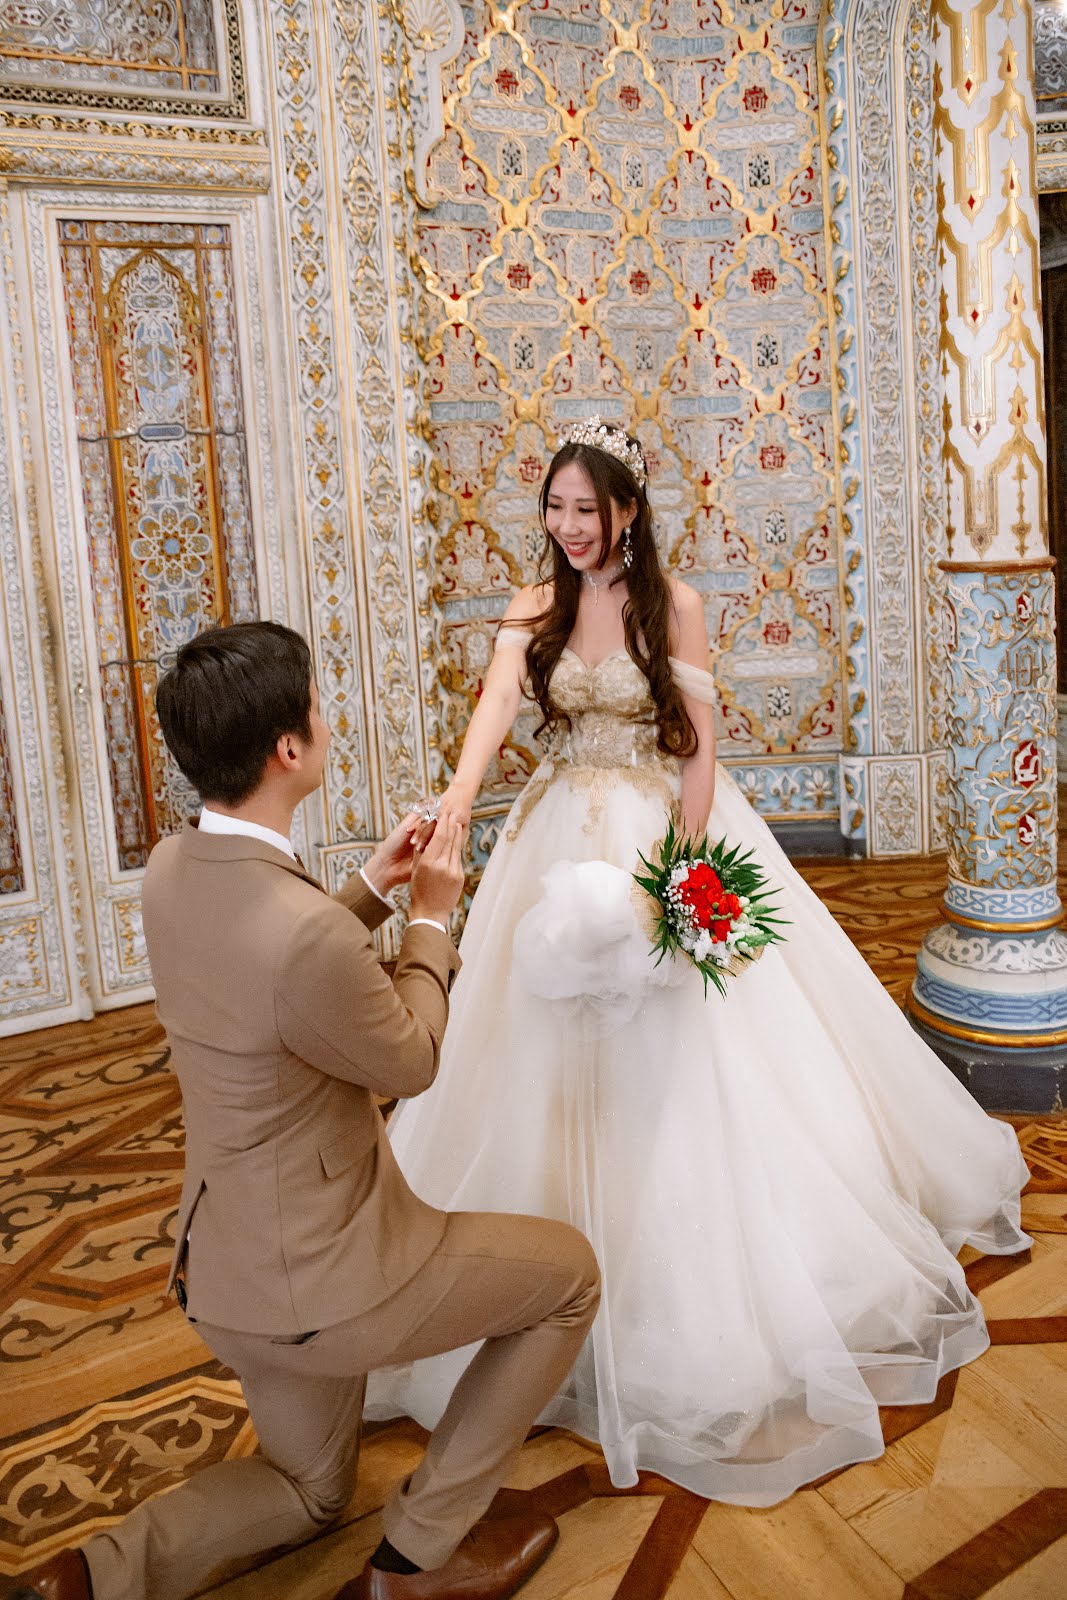 Dr VT & Sara Shantelle Lim's Pre-Wedding Photos at BOLSA PALACE Portugal (PART 1)